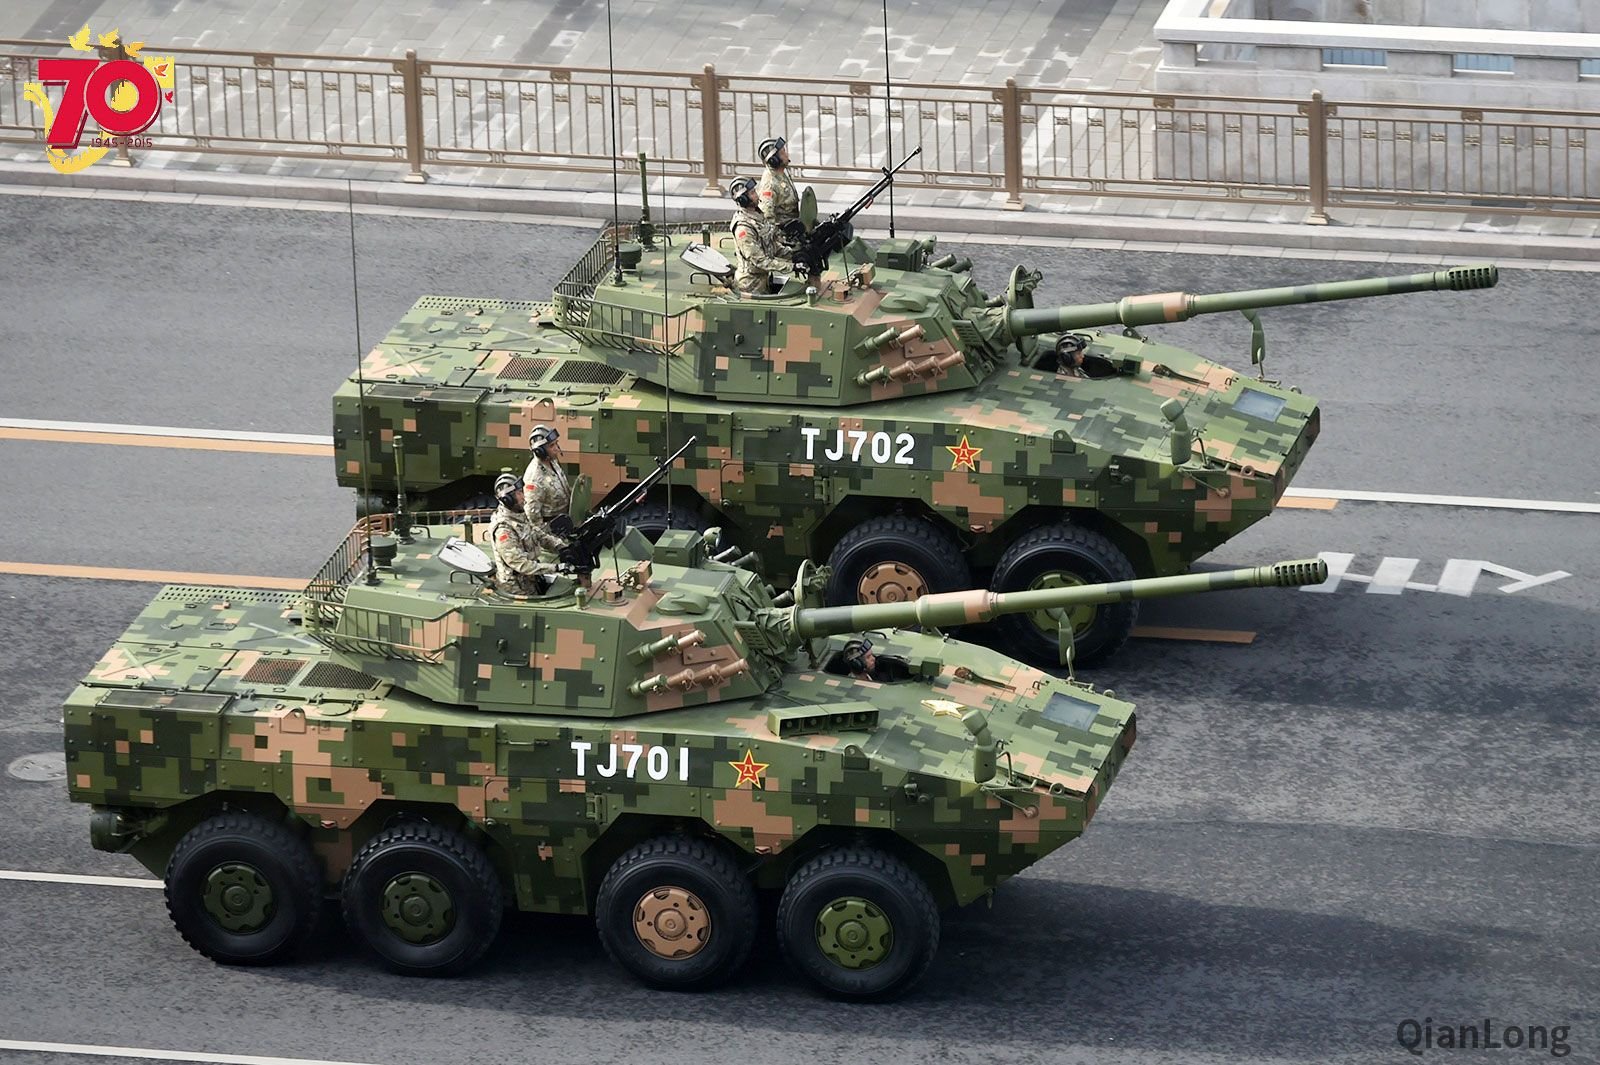 Включи машина танк. Китайский БТР ZBL-09. Китайские БМП ZBL-09. "Колесный танк" ztl-11. Китайский колесный танк ztl-11.